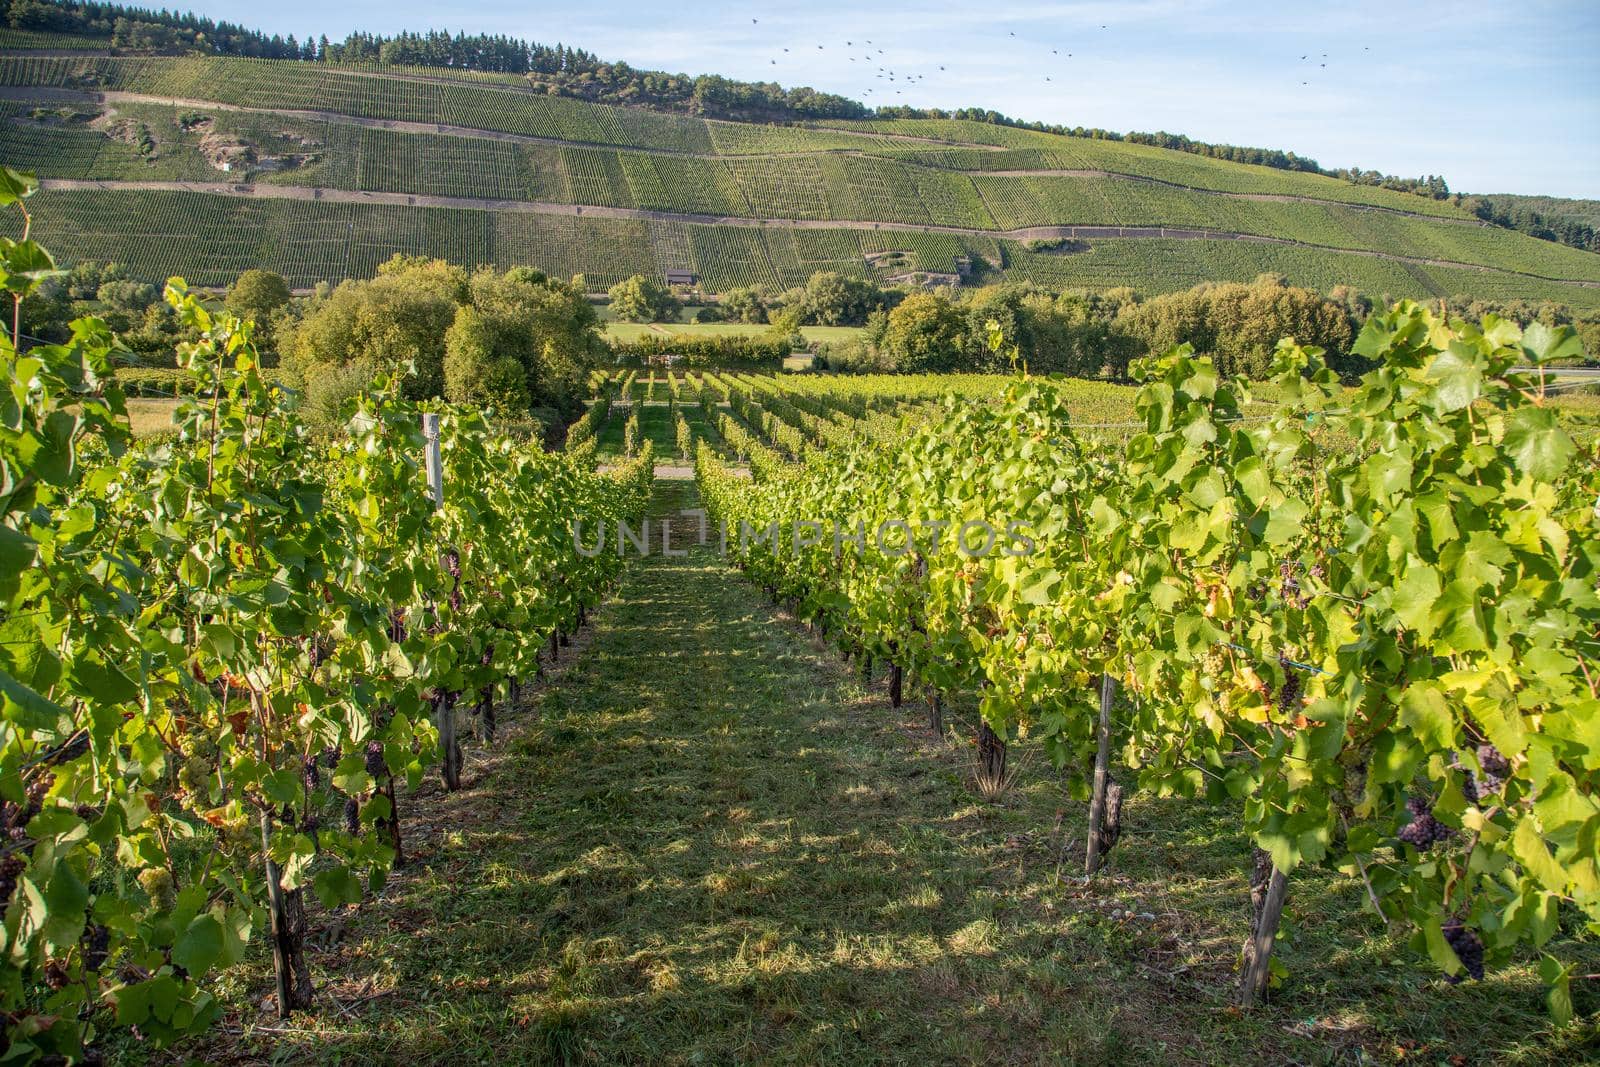 Vineyard in autumn just before the grape harvest in Brauneberg by reinerc